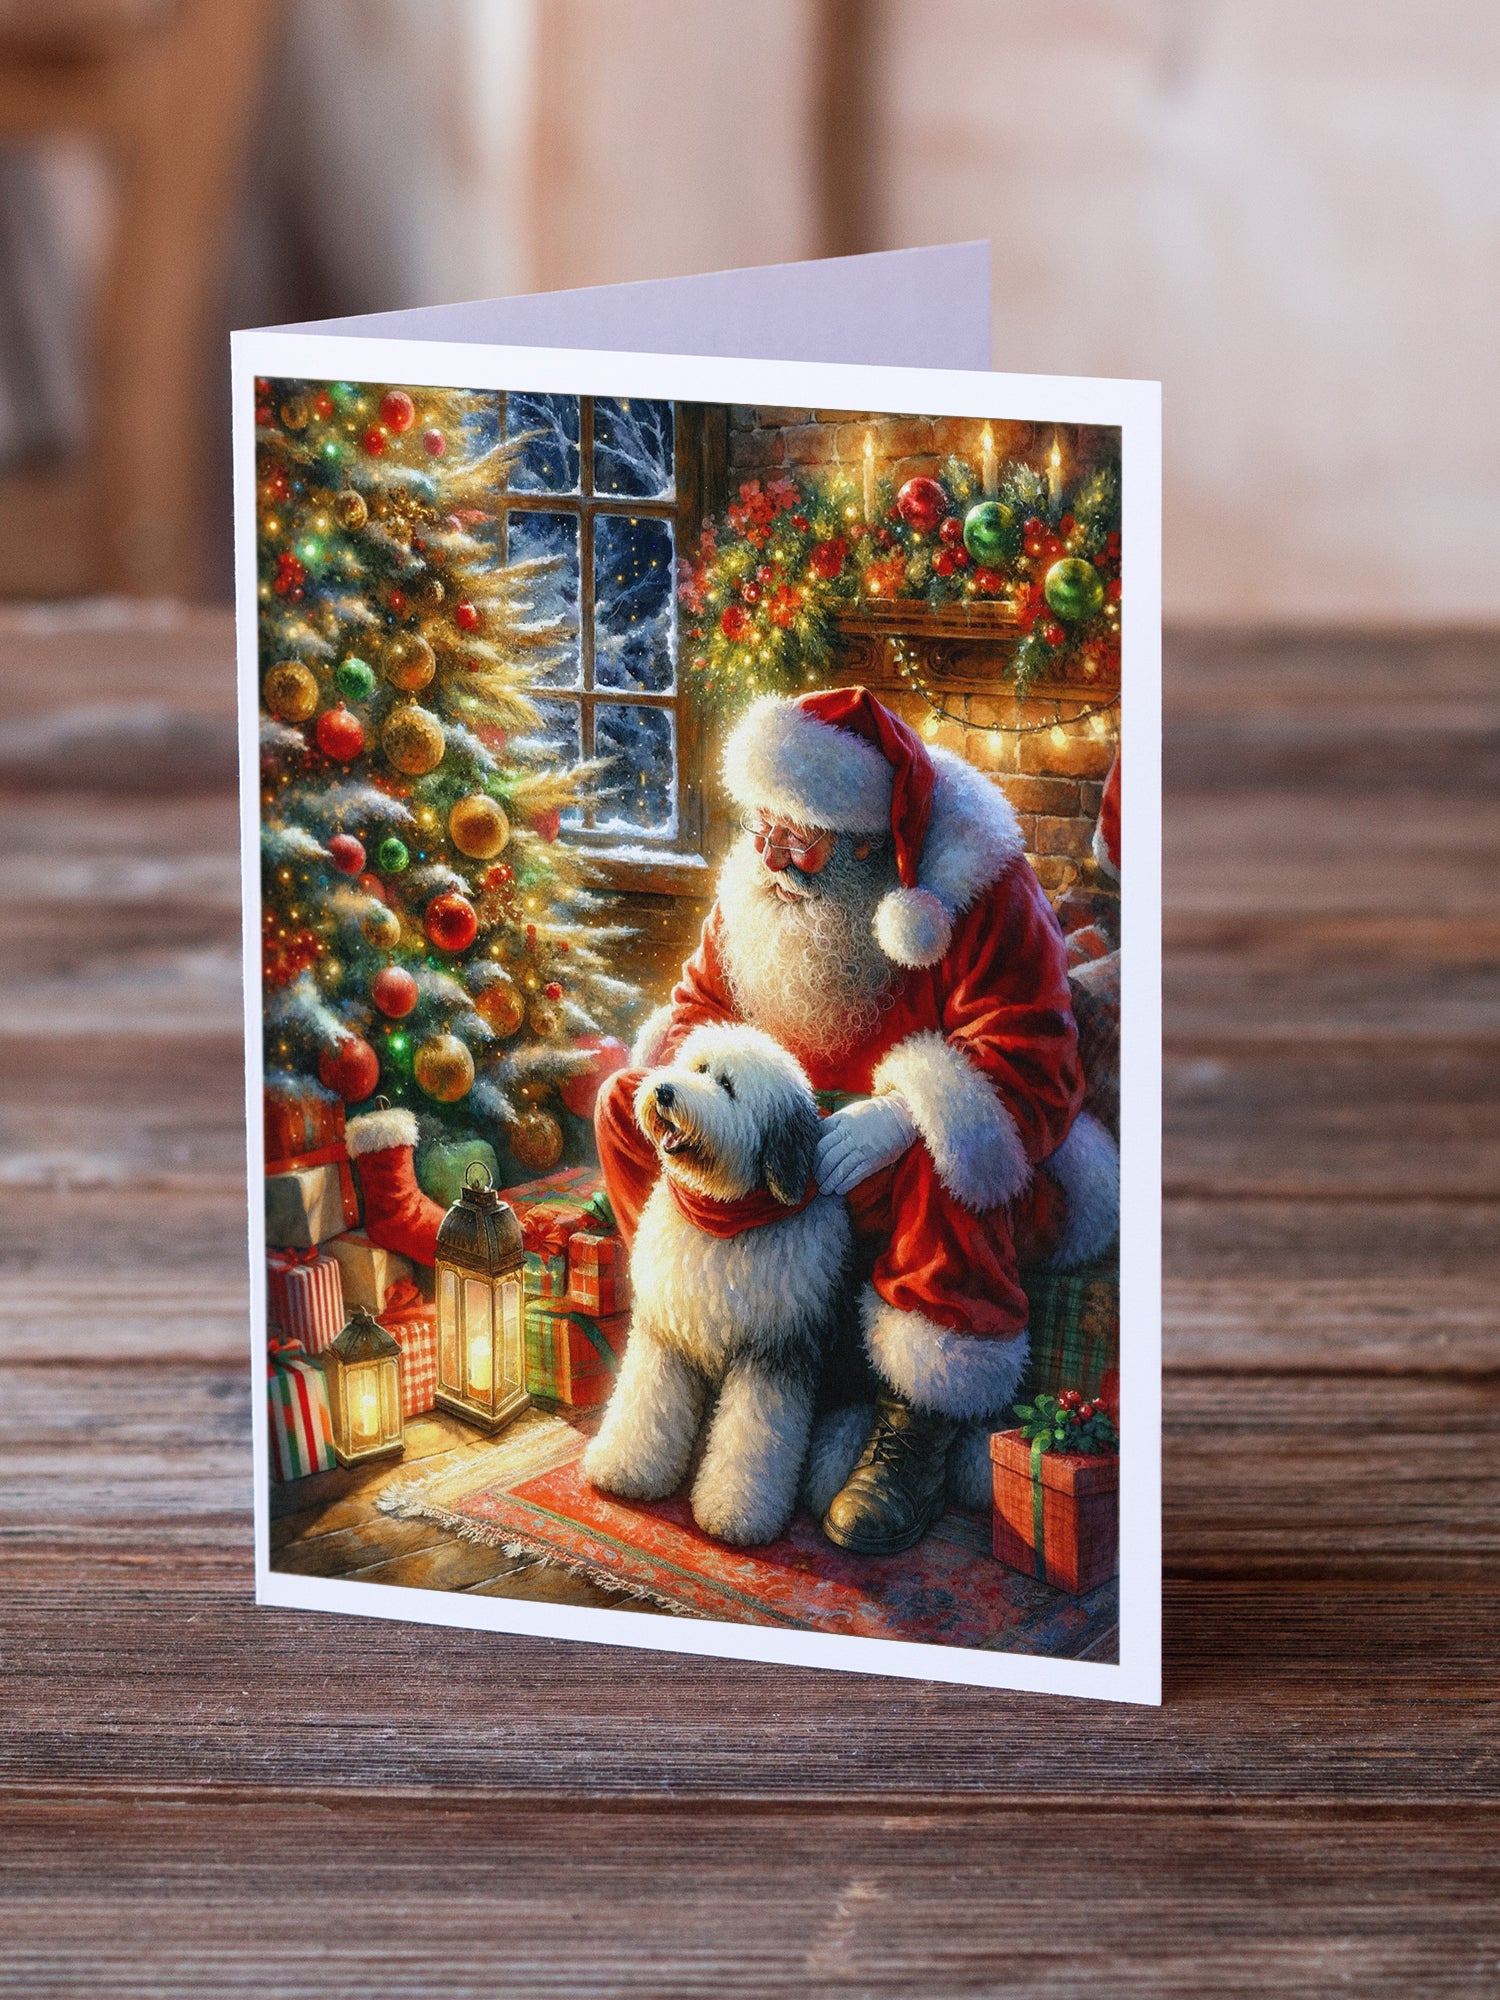 Old English Sheepdog and Santa Claus Greeting Cards Pack of 8